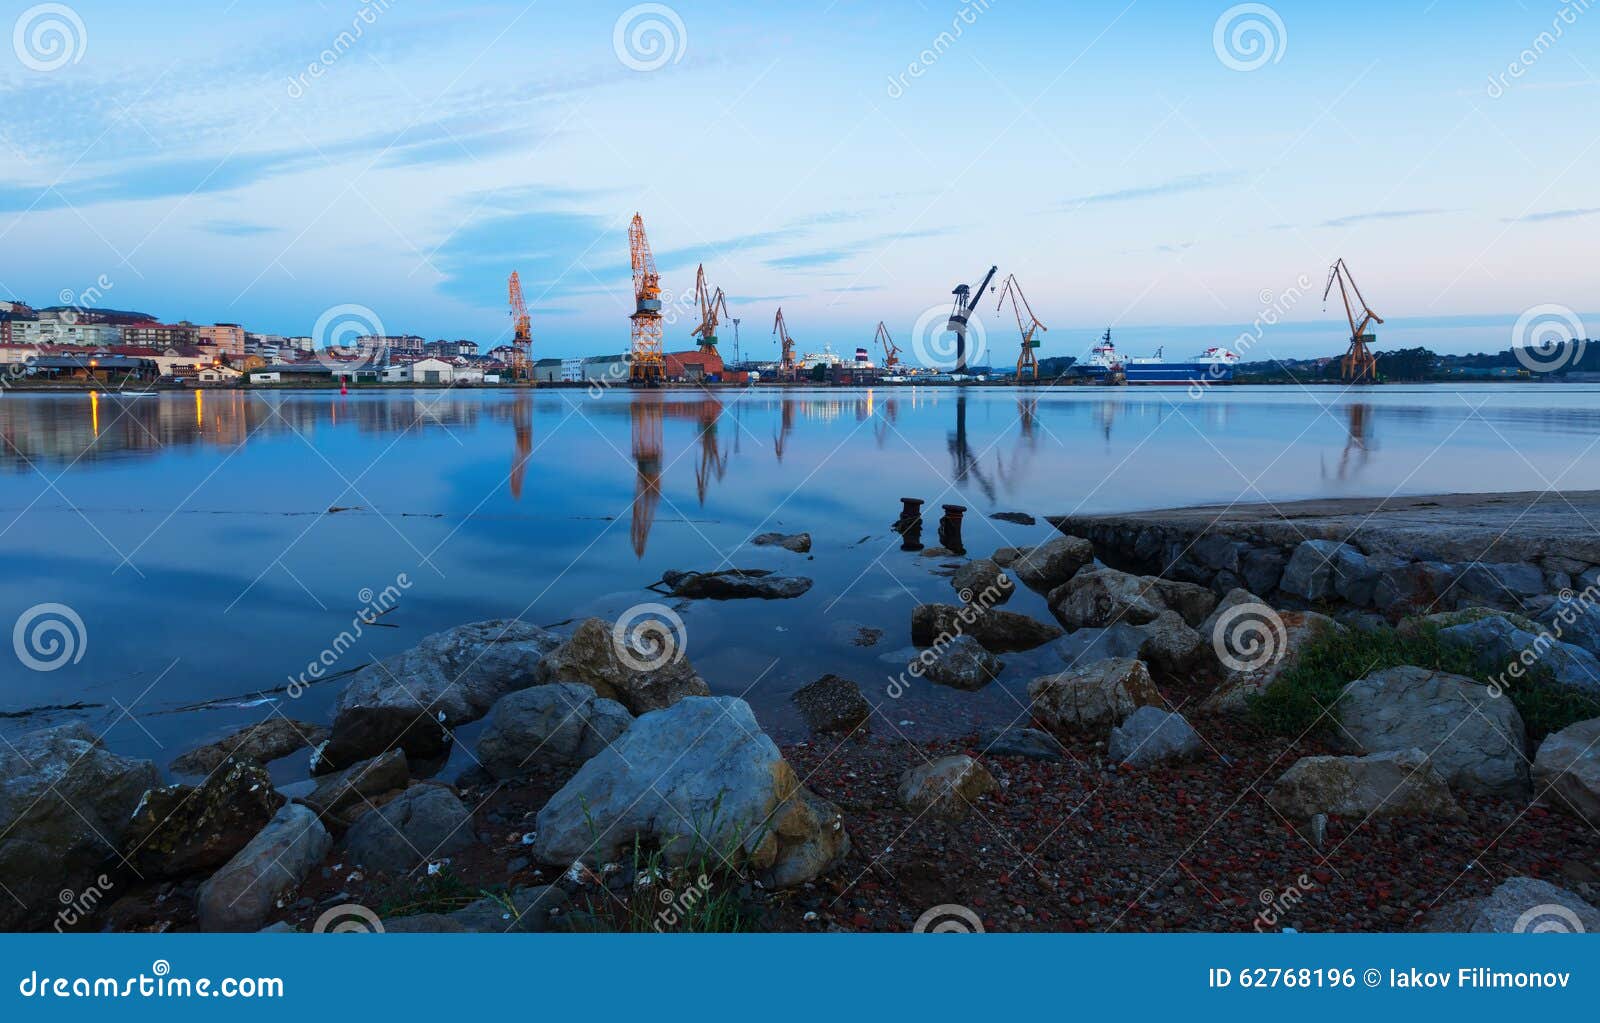 twilight view of industrial port. santander